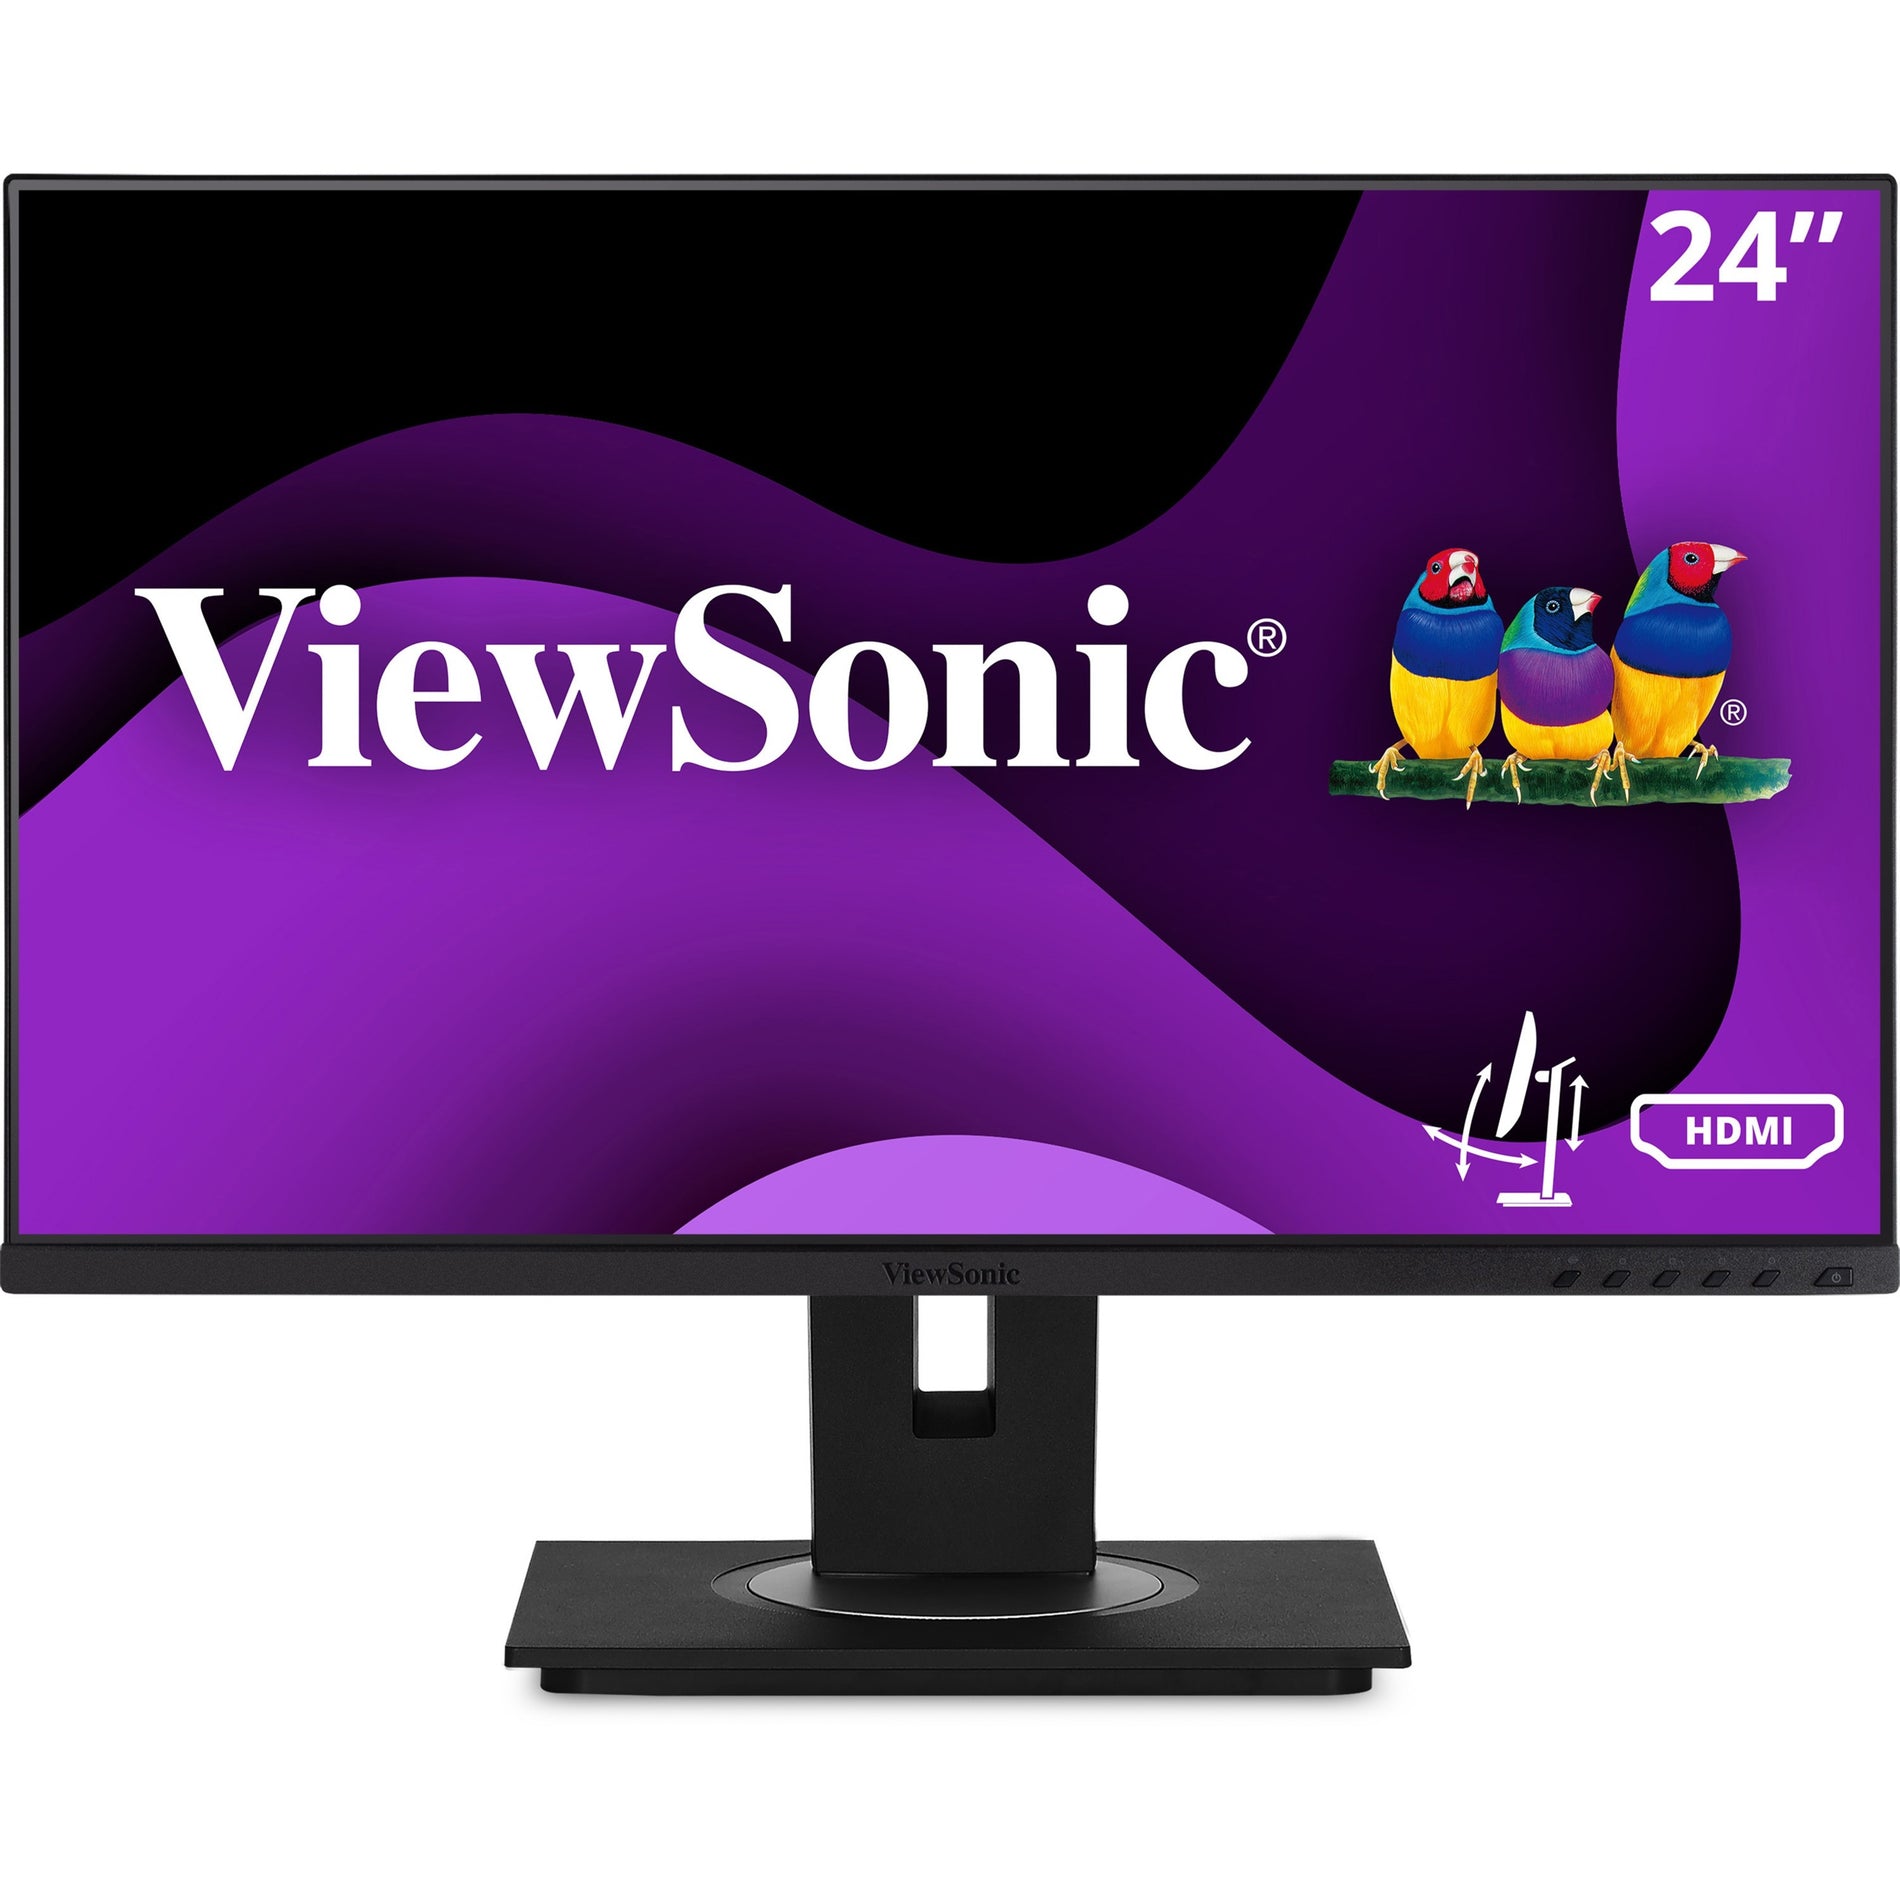 ViewSonic VG2448A 24" Ergonomic IPS Monitor, 1080p, HDMI, DP, VGA